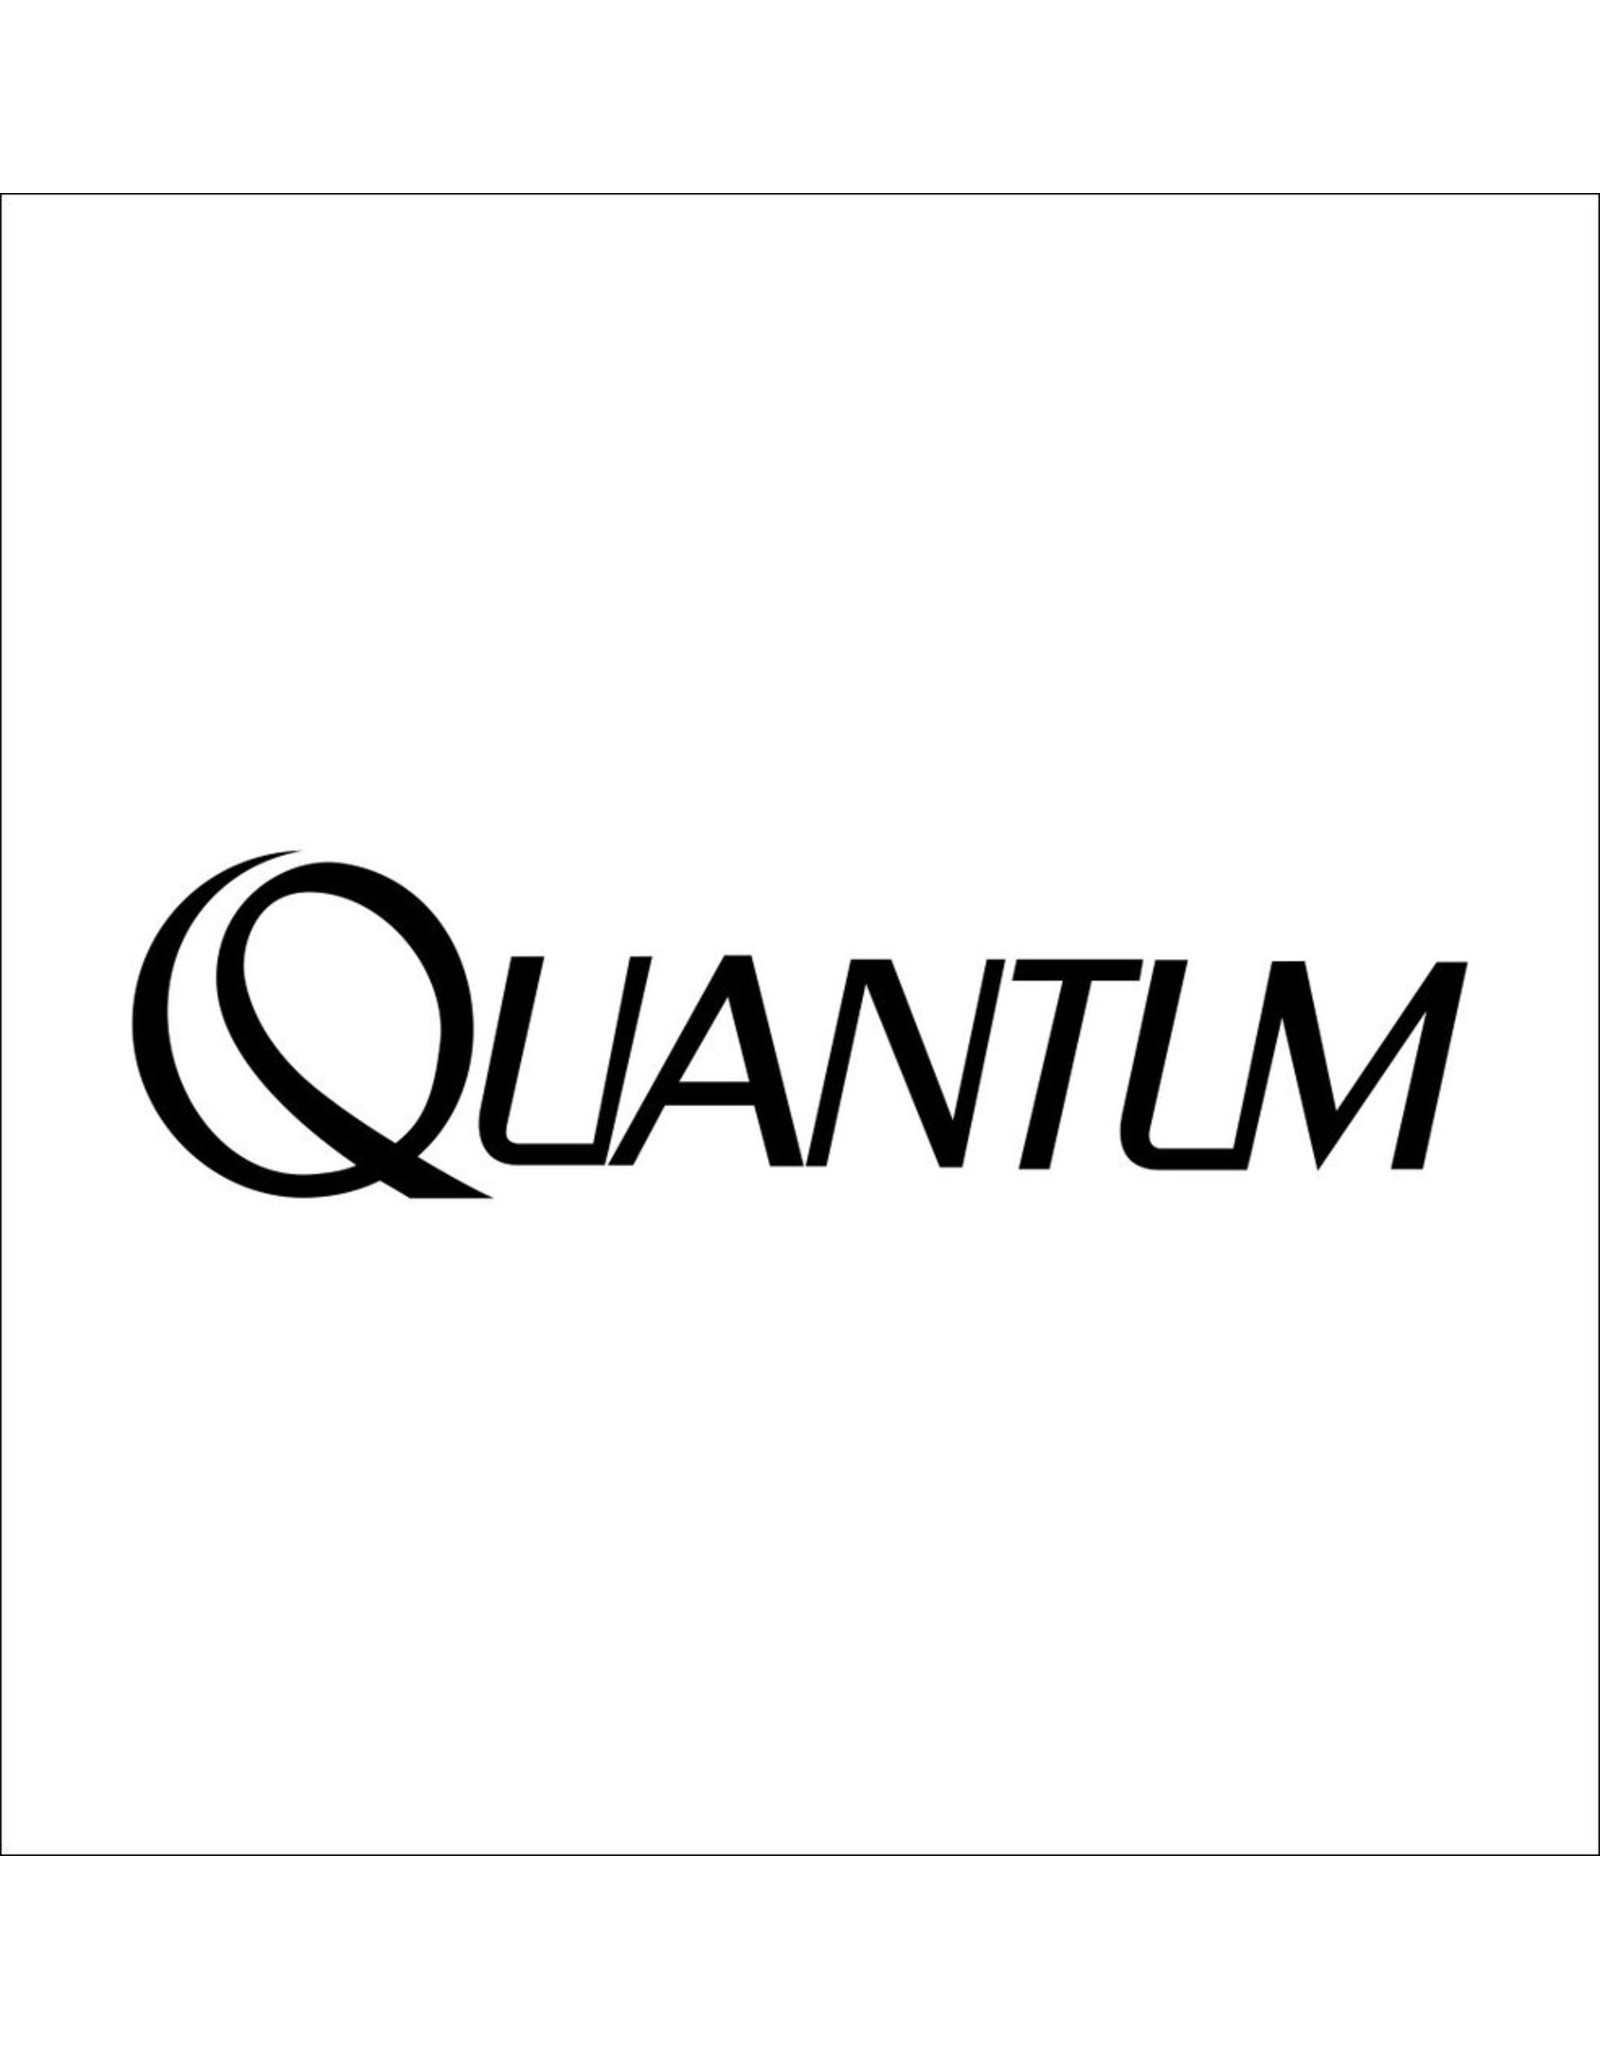 Quantum DAA158-01  O/S GEAR BEARING 12x8x2.5